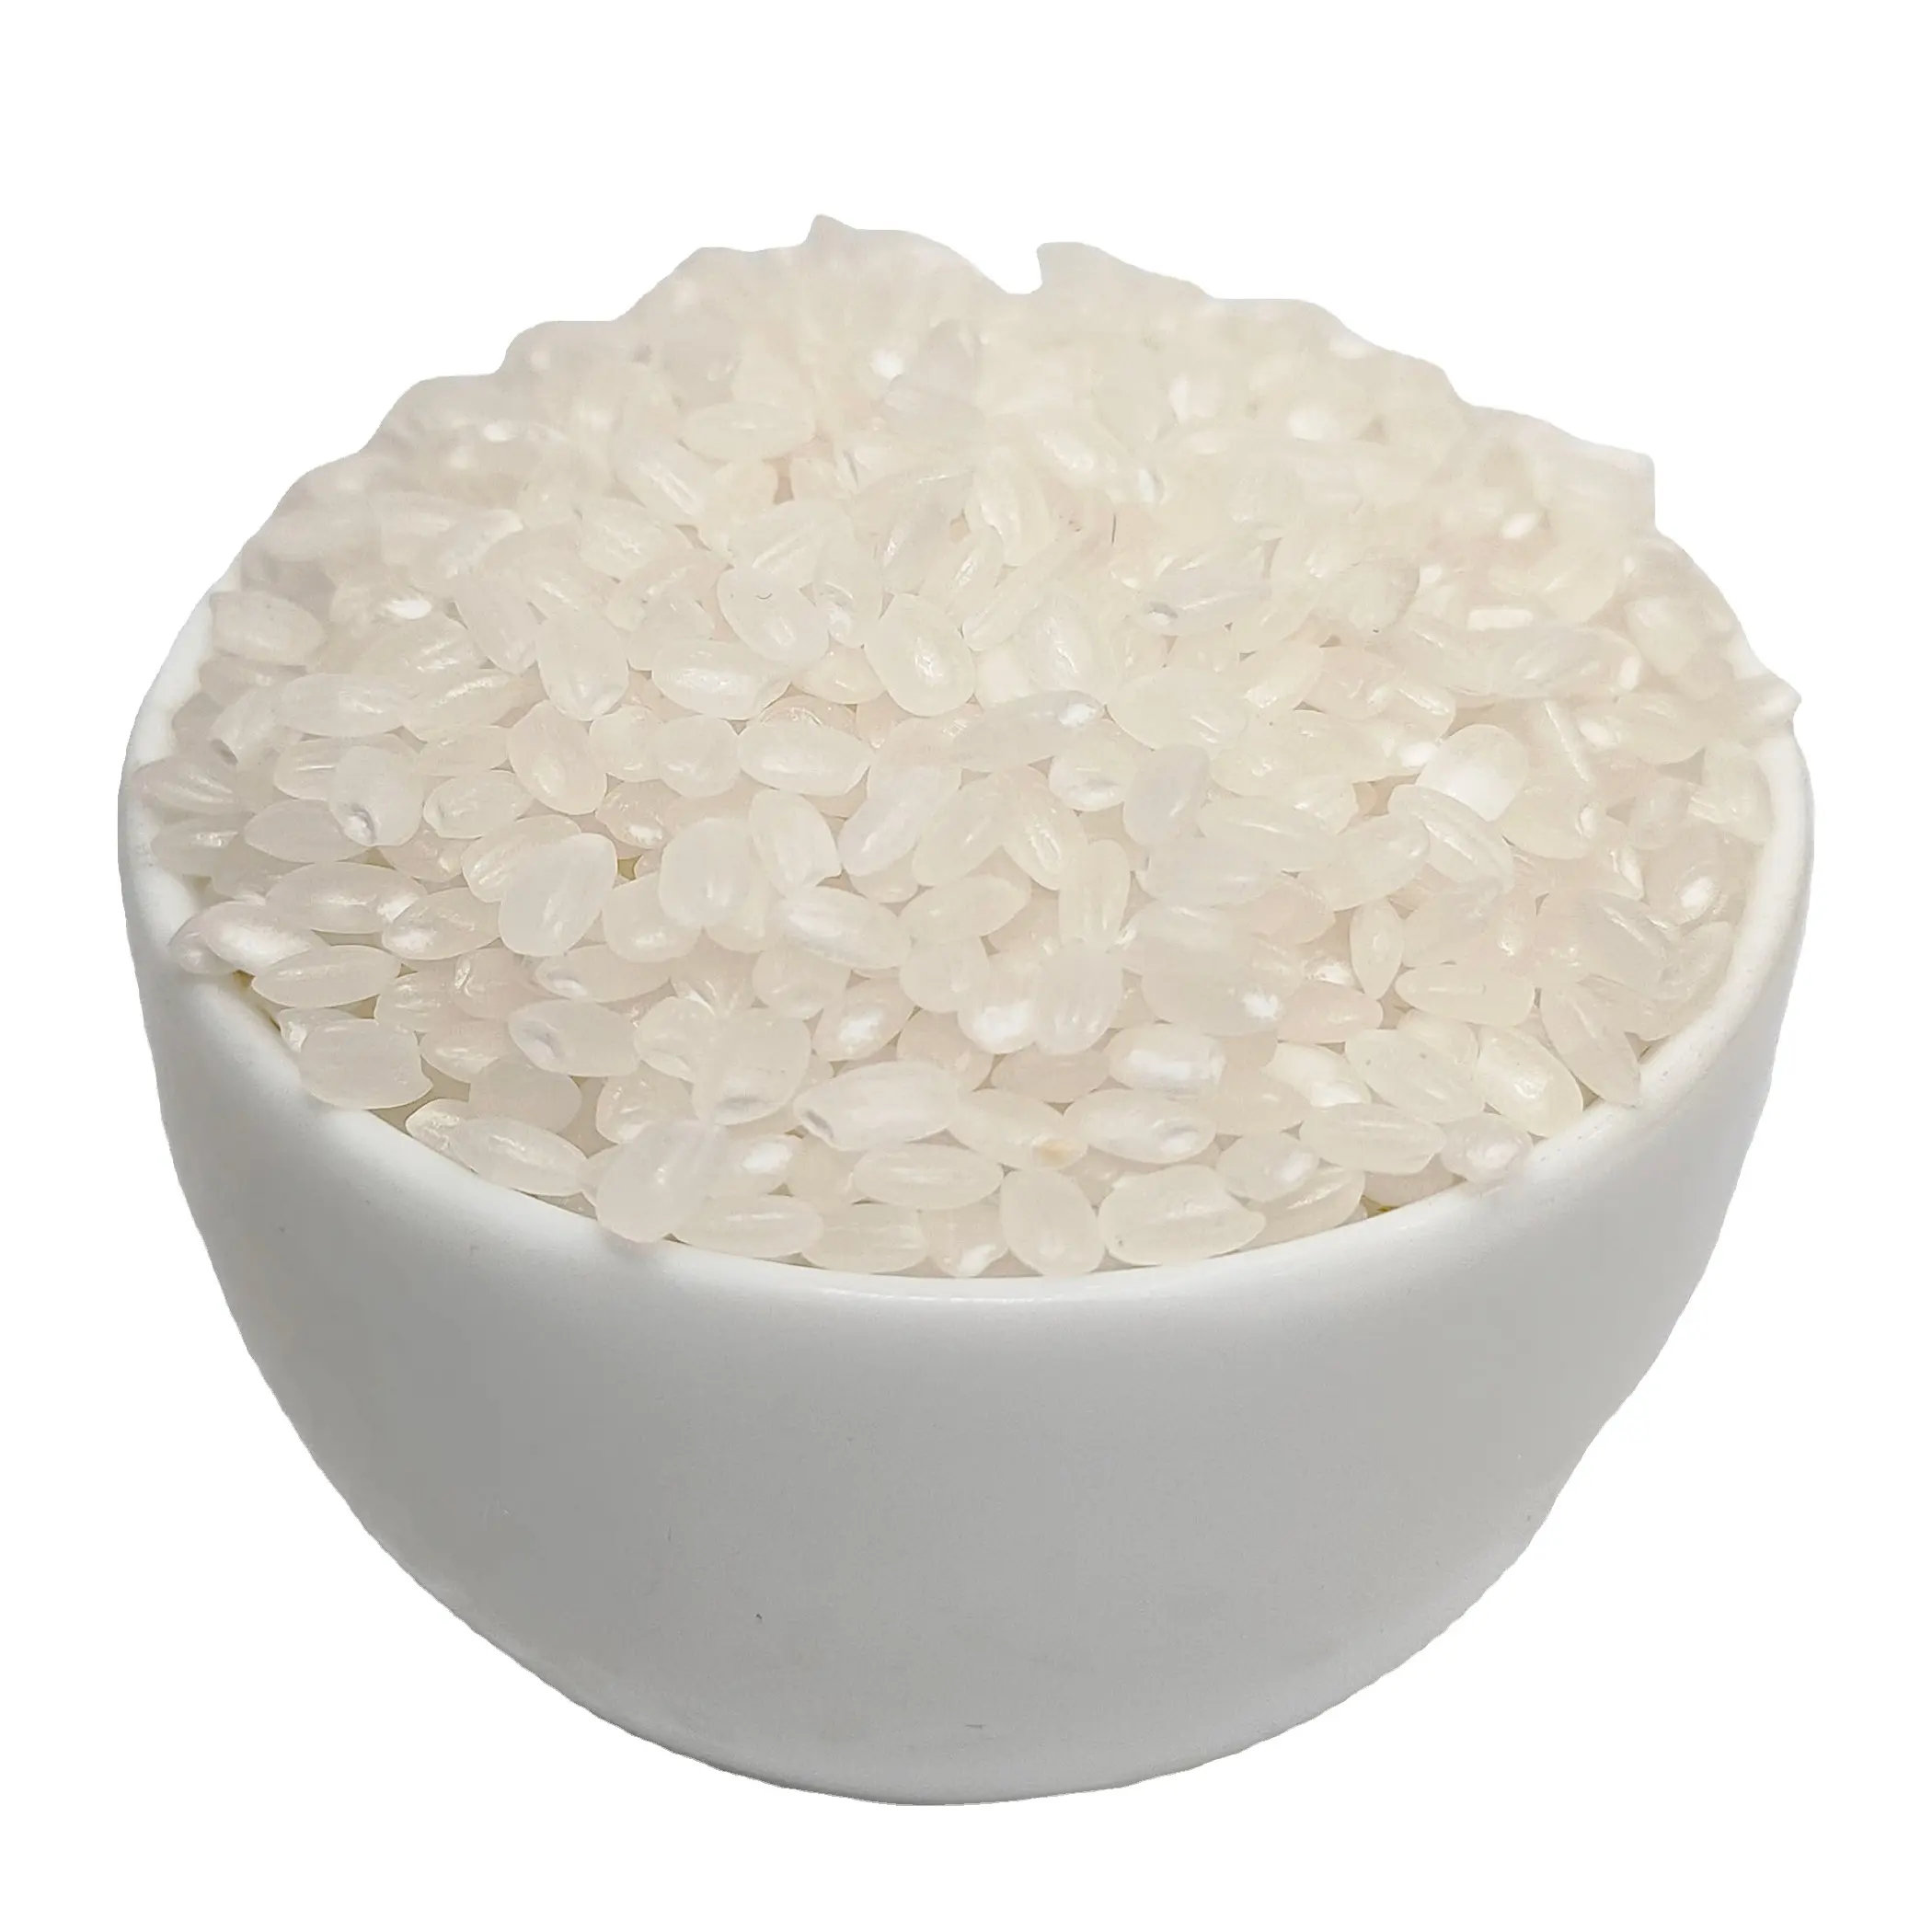 Vietrice Japonica Rice - Premium Vietnamese Japonica Rice Supplier | Alibaba Vietrice